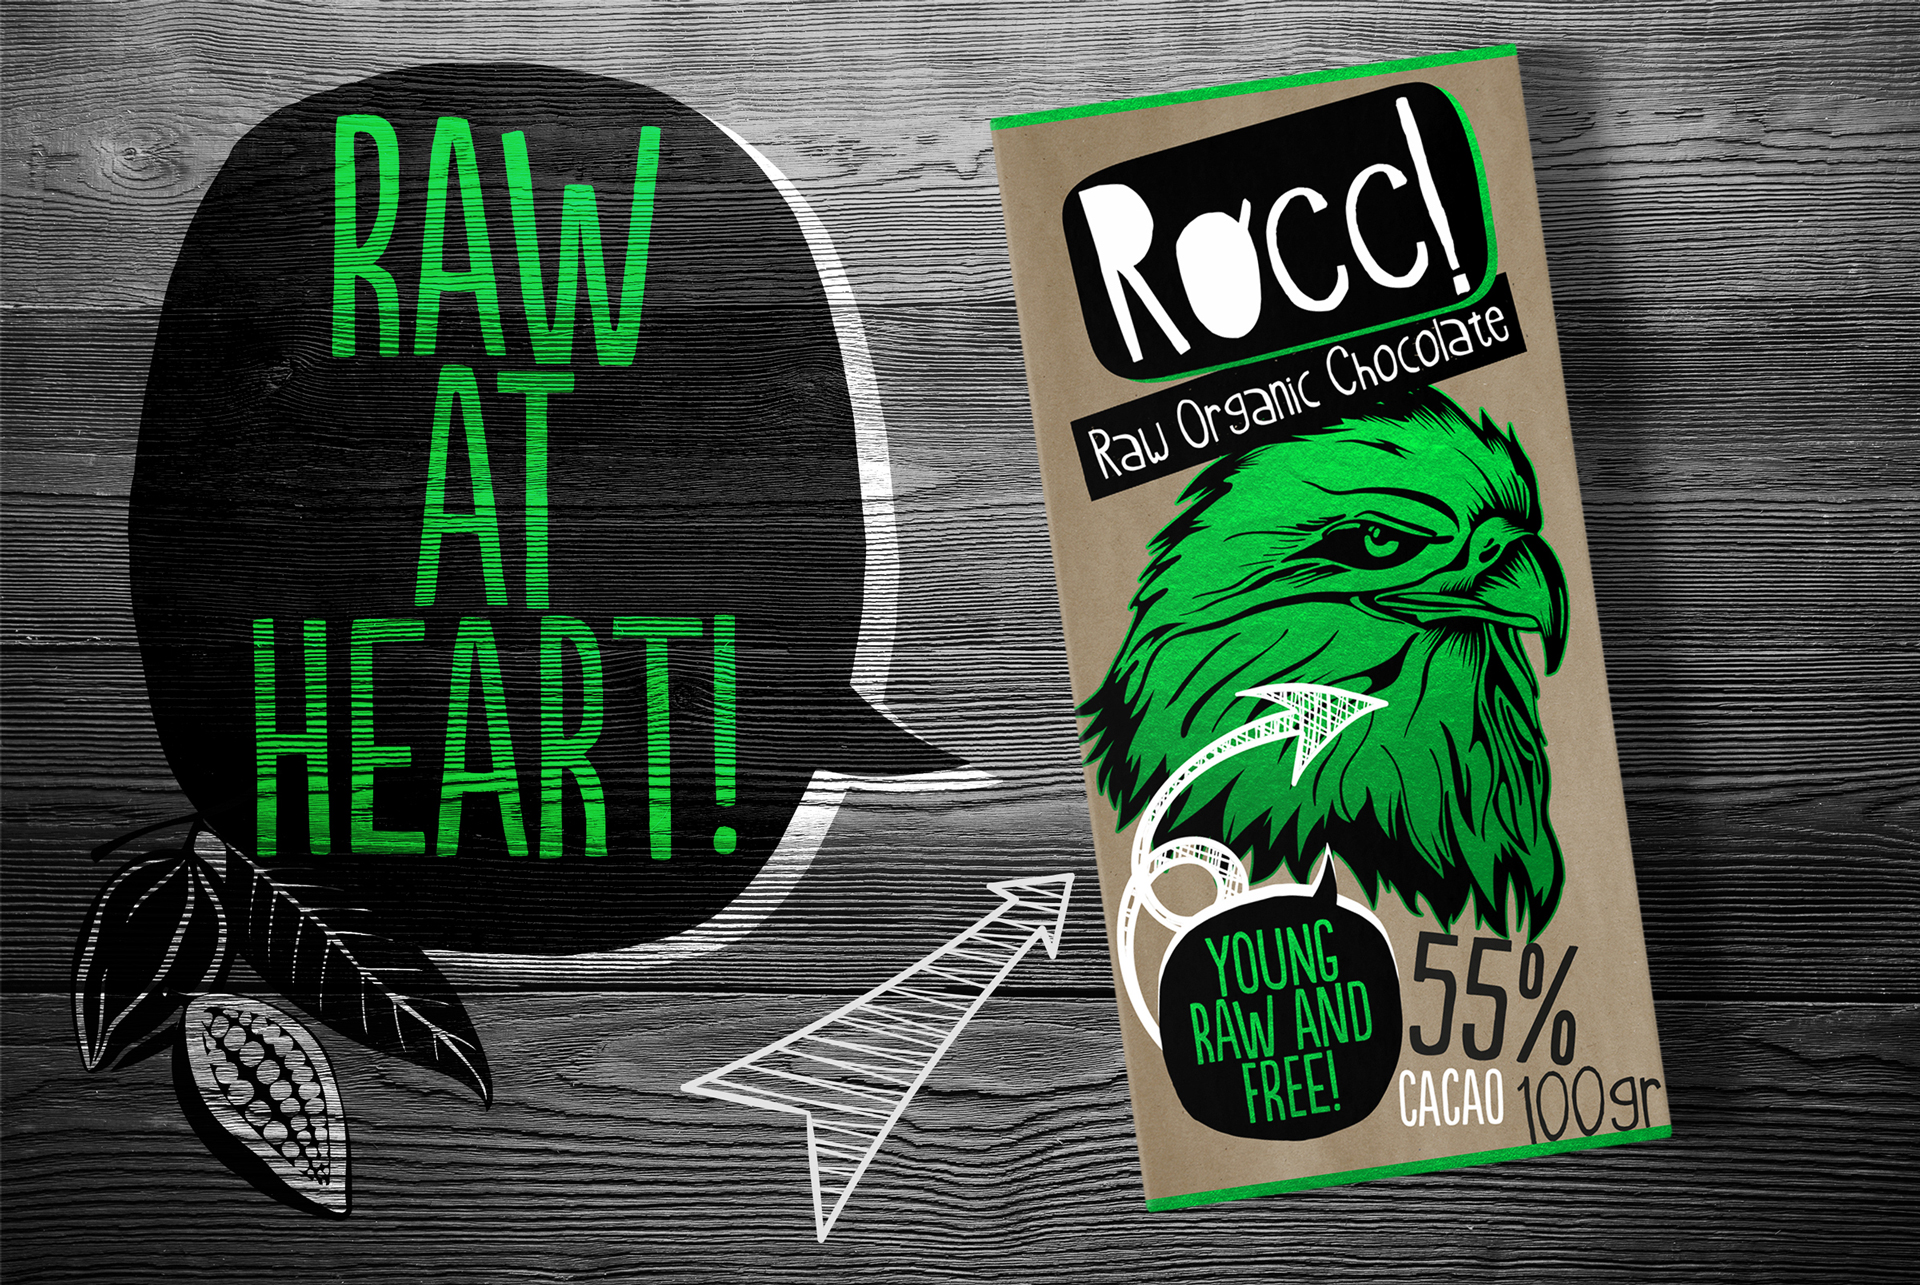 Rocc! Raw Organic Chocolate (2)